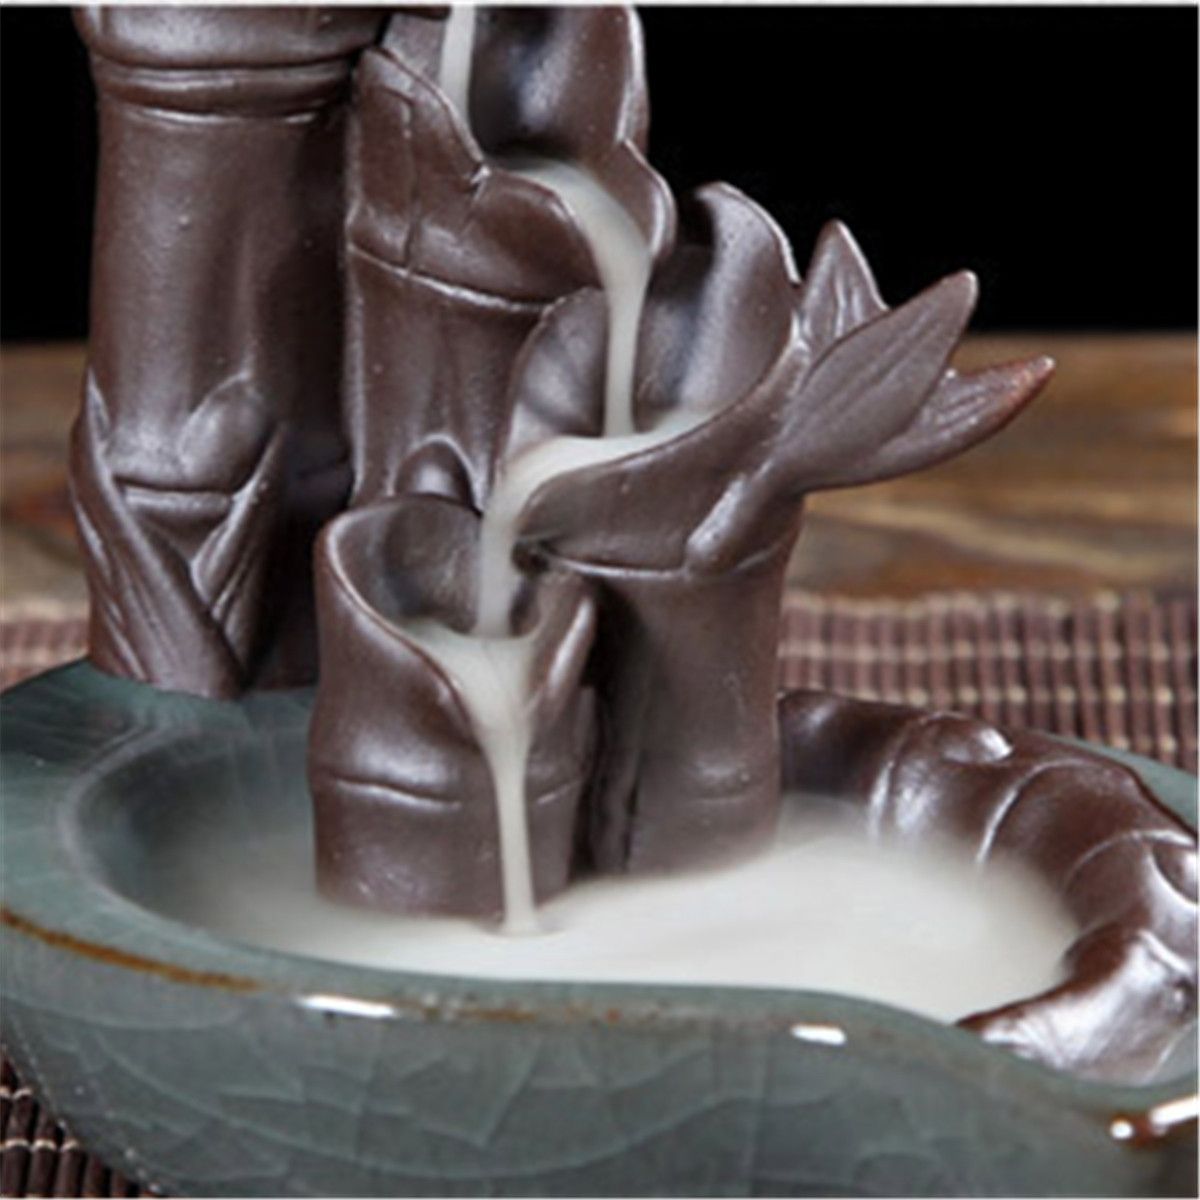 Porcelain-Bamboo-Pool-Design-Backflow-Ceramic-Incense-Burner-Cone-Holder-Censer-Fragrant-Decor-1405992